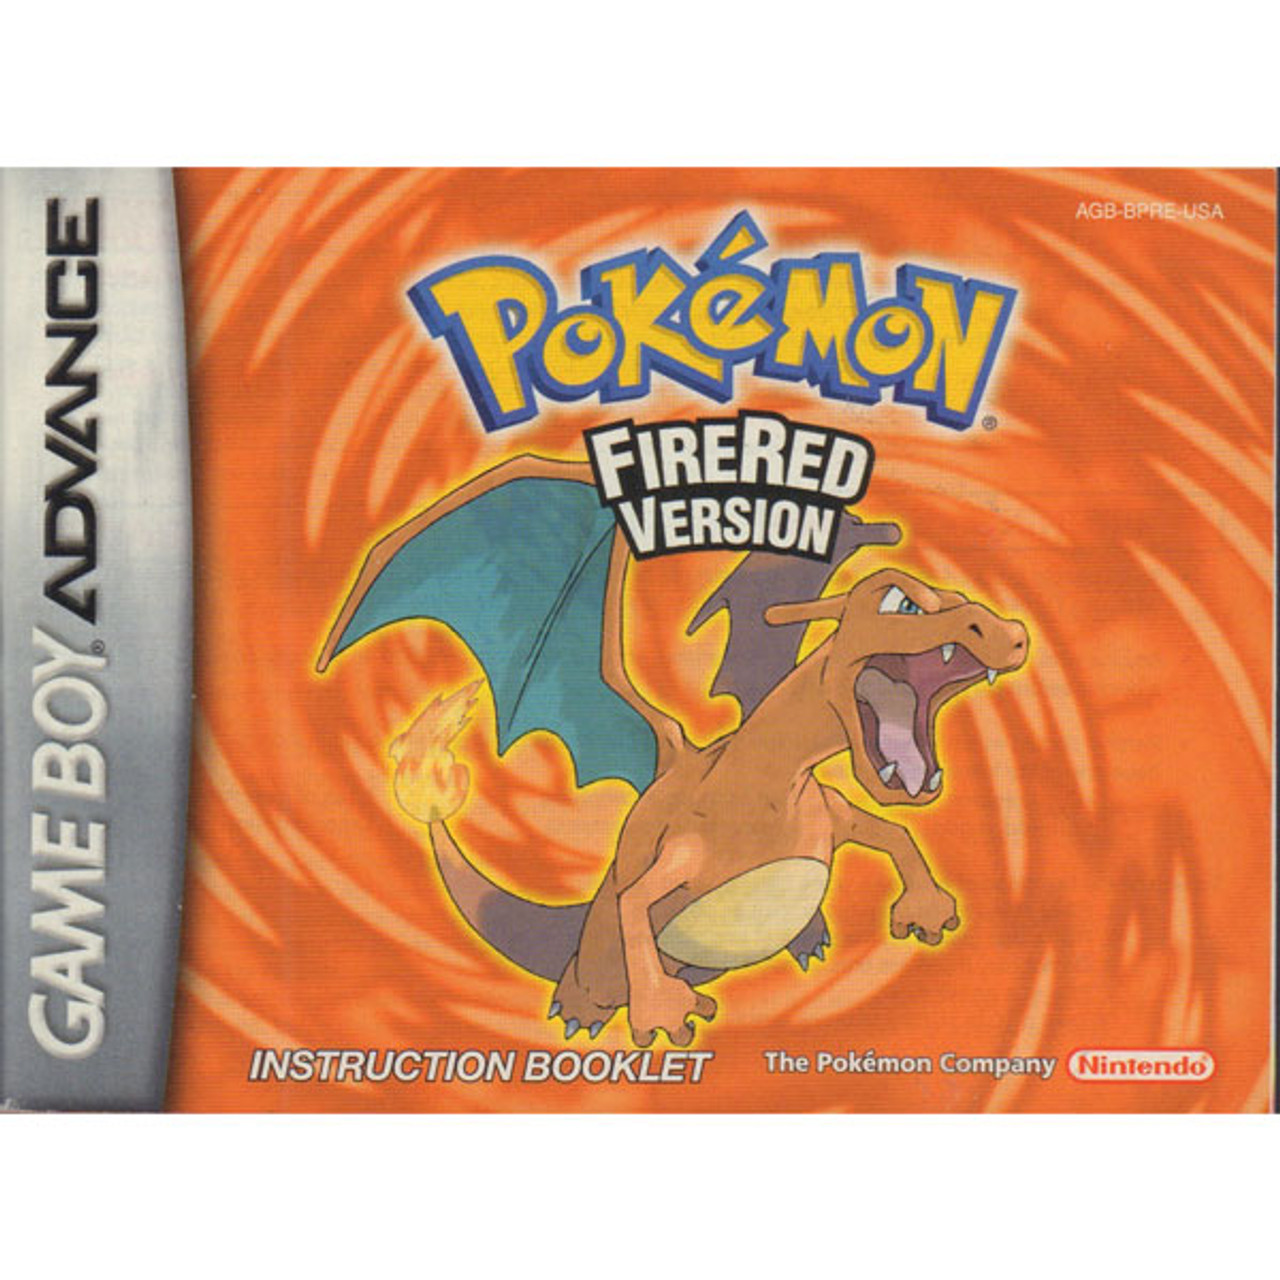  Pokemon: FireRed Version : Artist Not Provided: Video